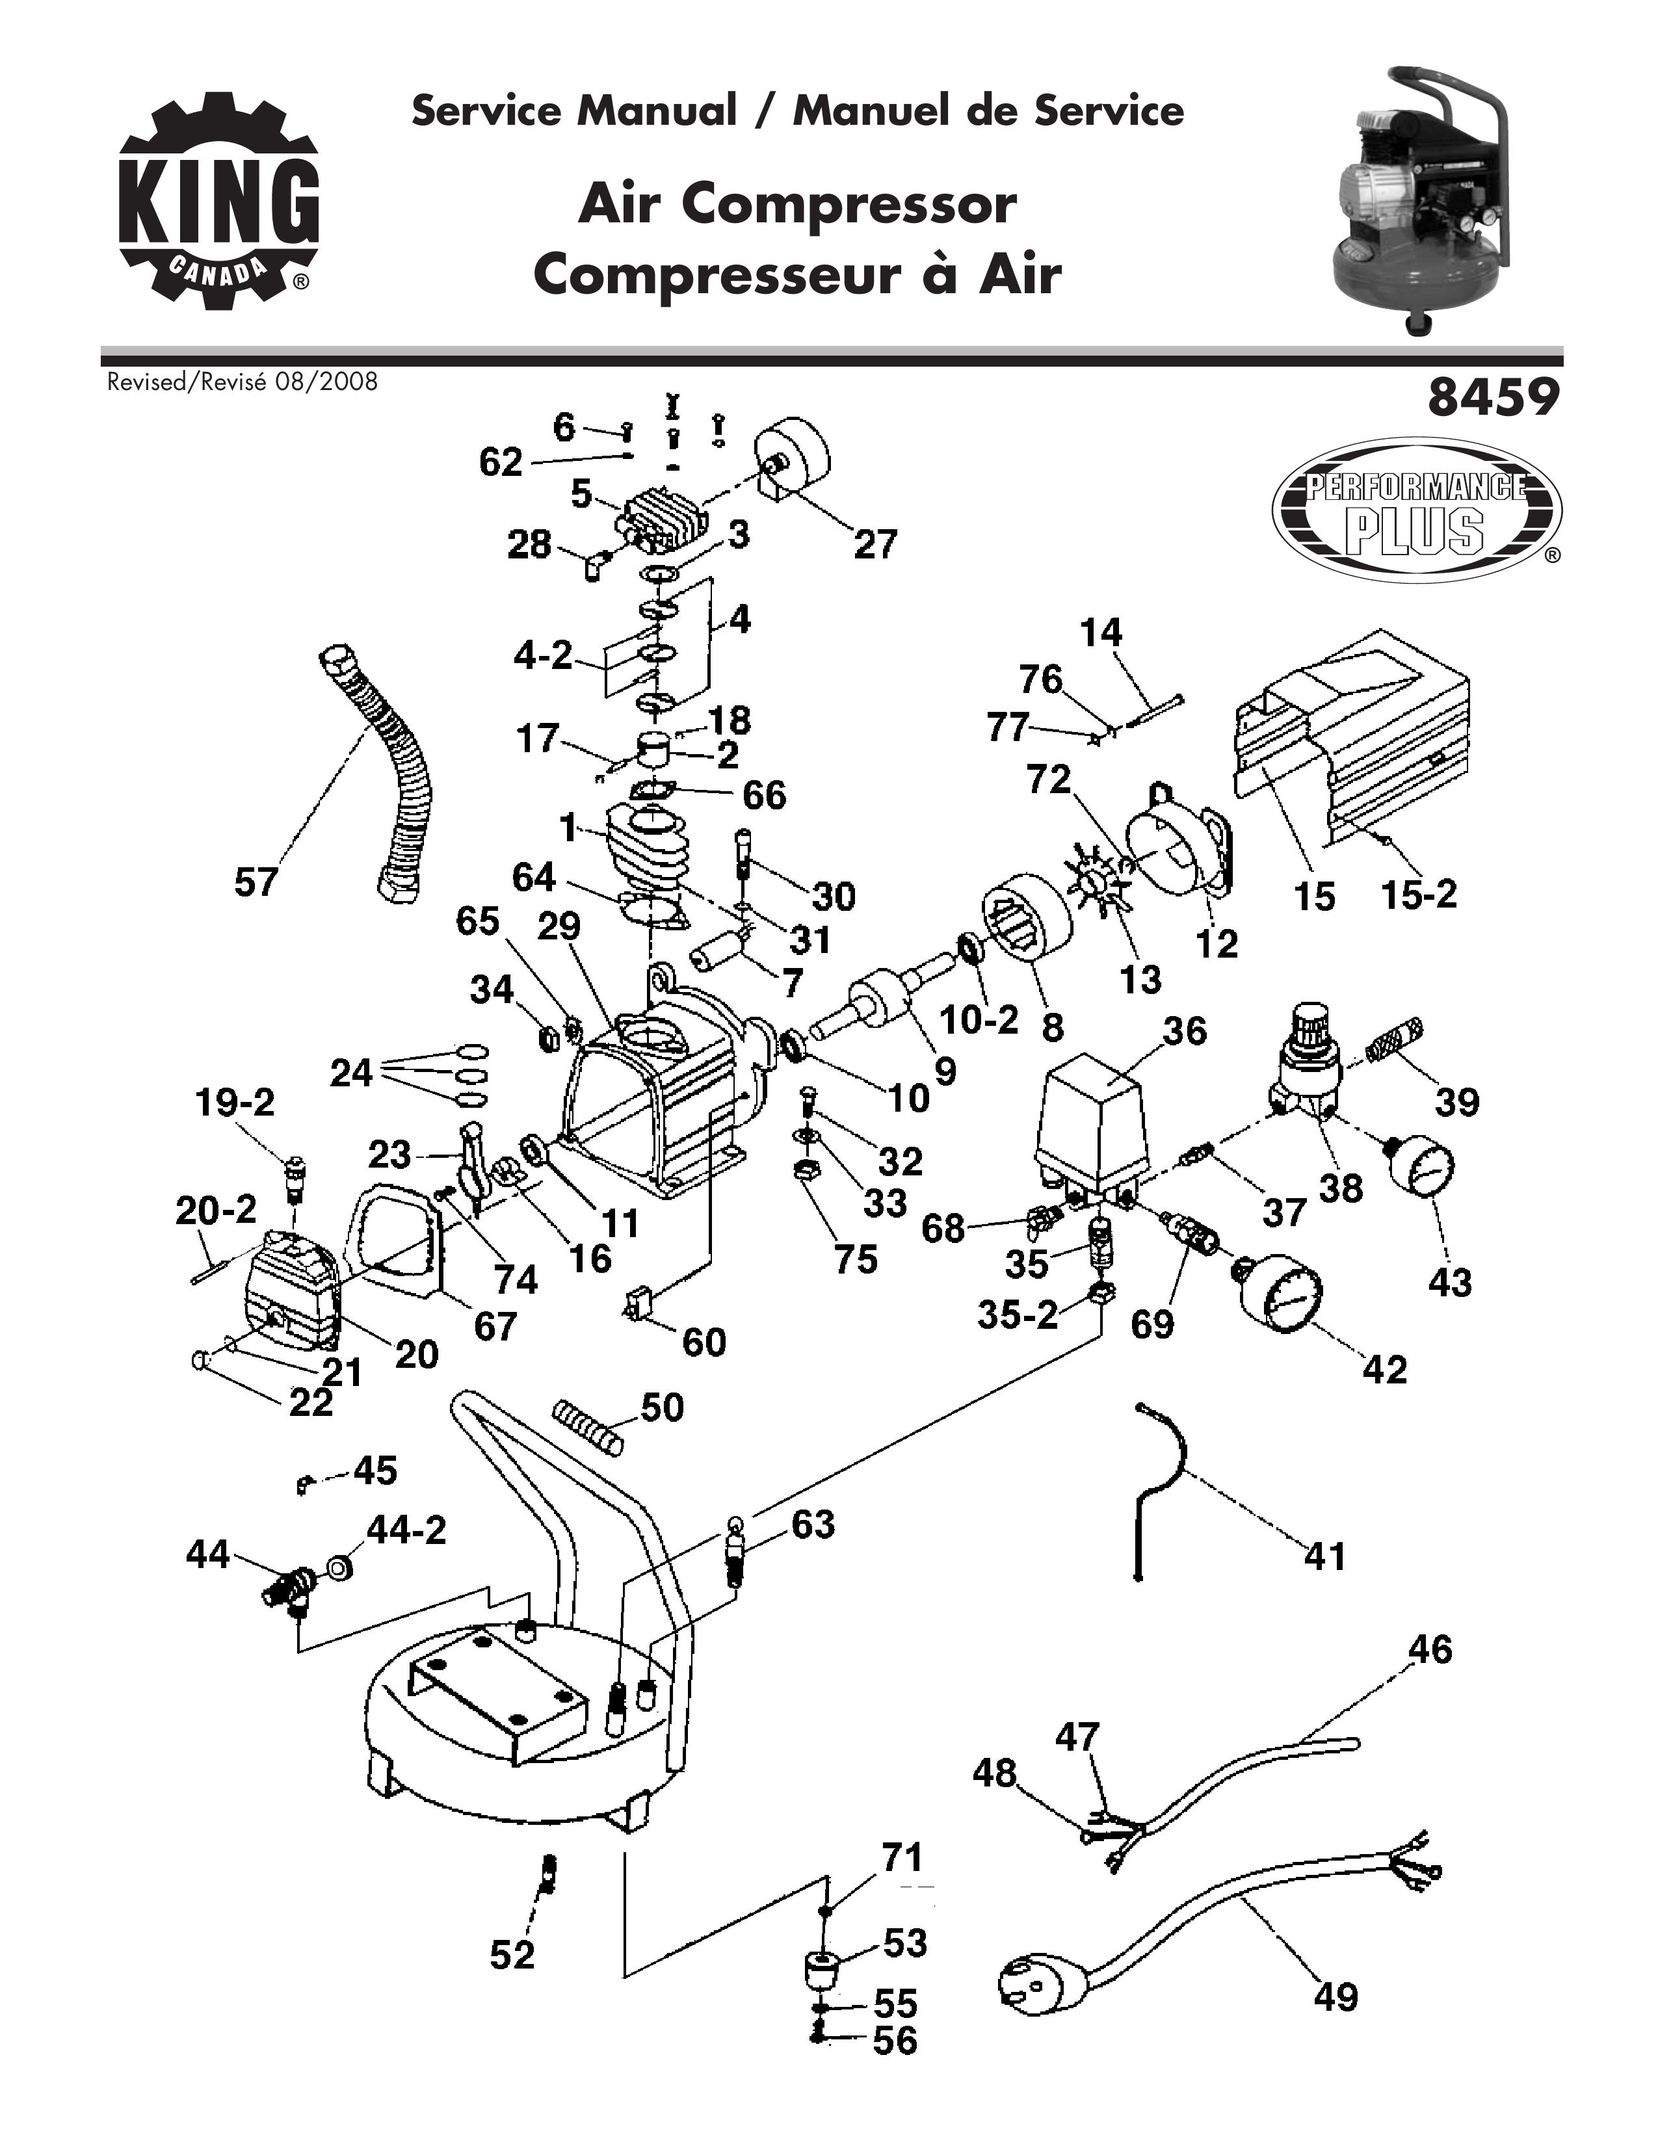 King Canada 8459 Air Compressor User Manual